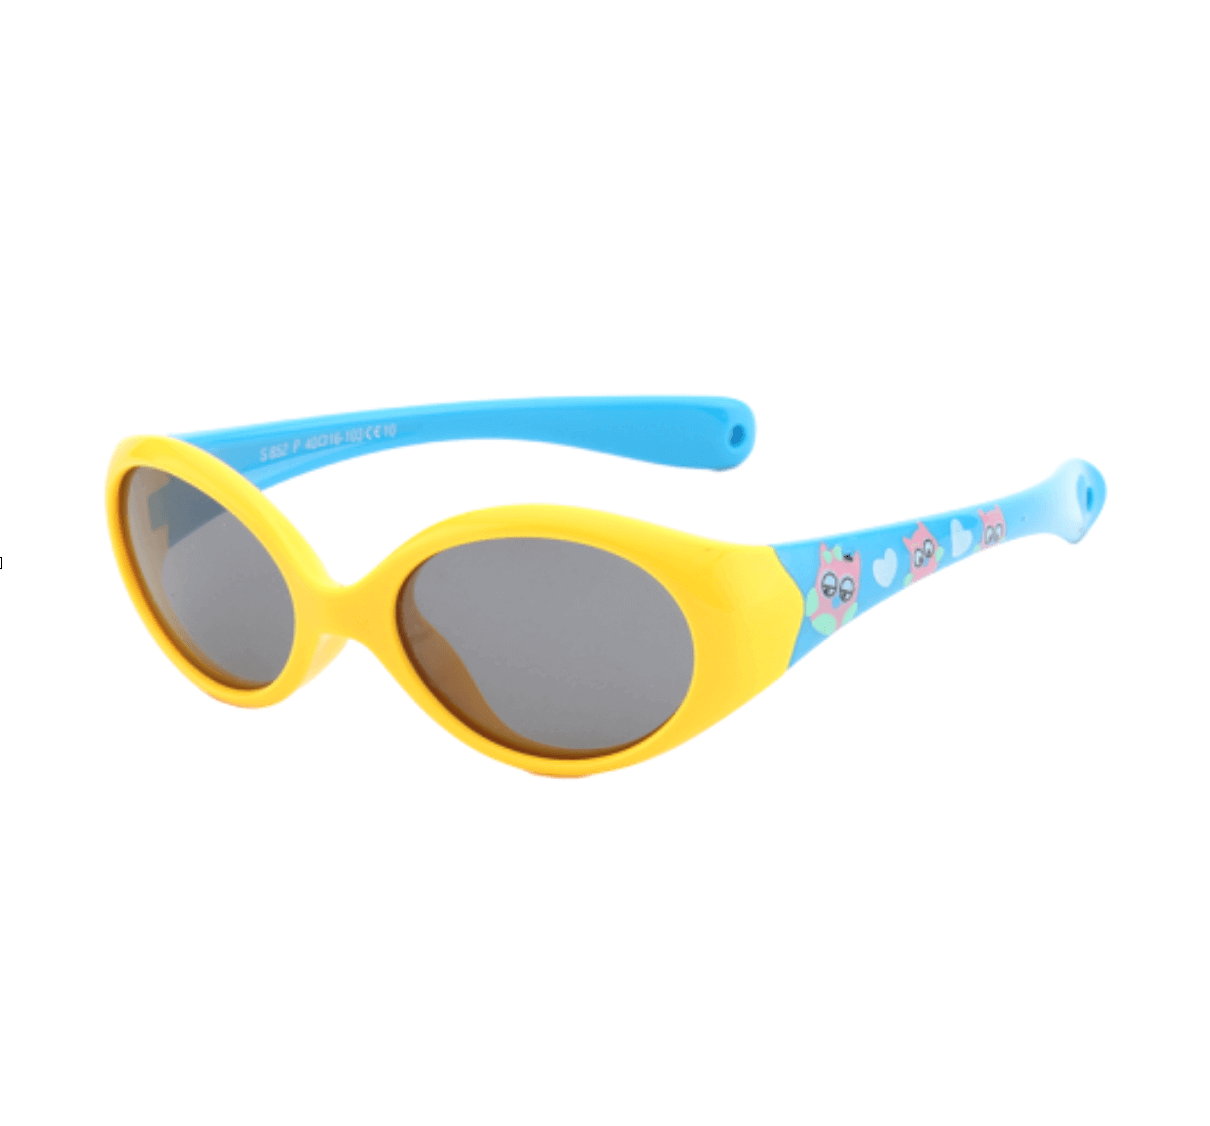 wholesale polarized sunglasses, yellow baby sunglasses, wholesale polarized sunglasses China, bulk polarized sunglasses, Sunglasses Manufacturer